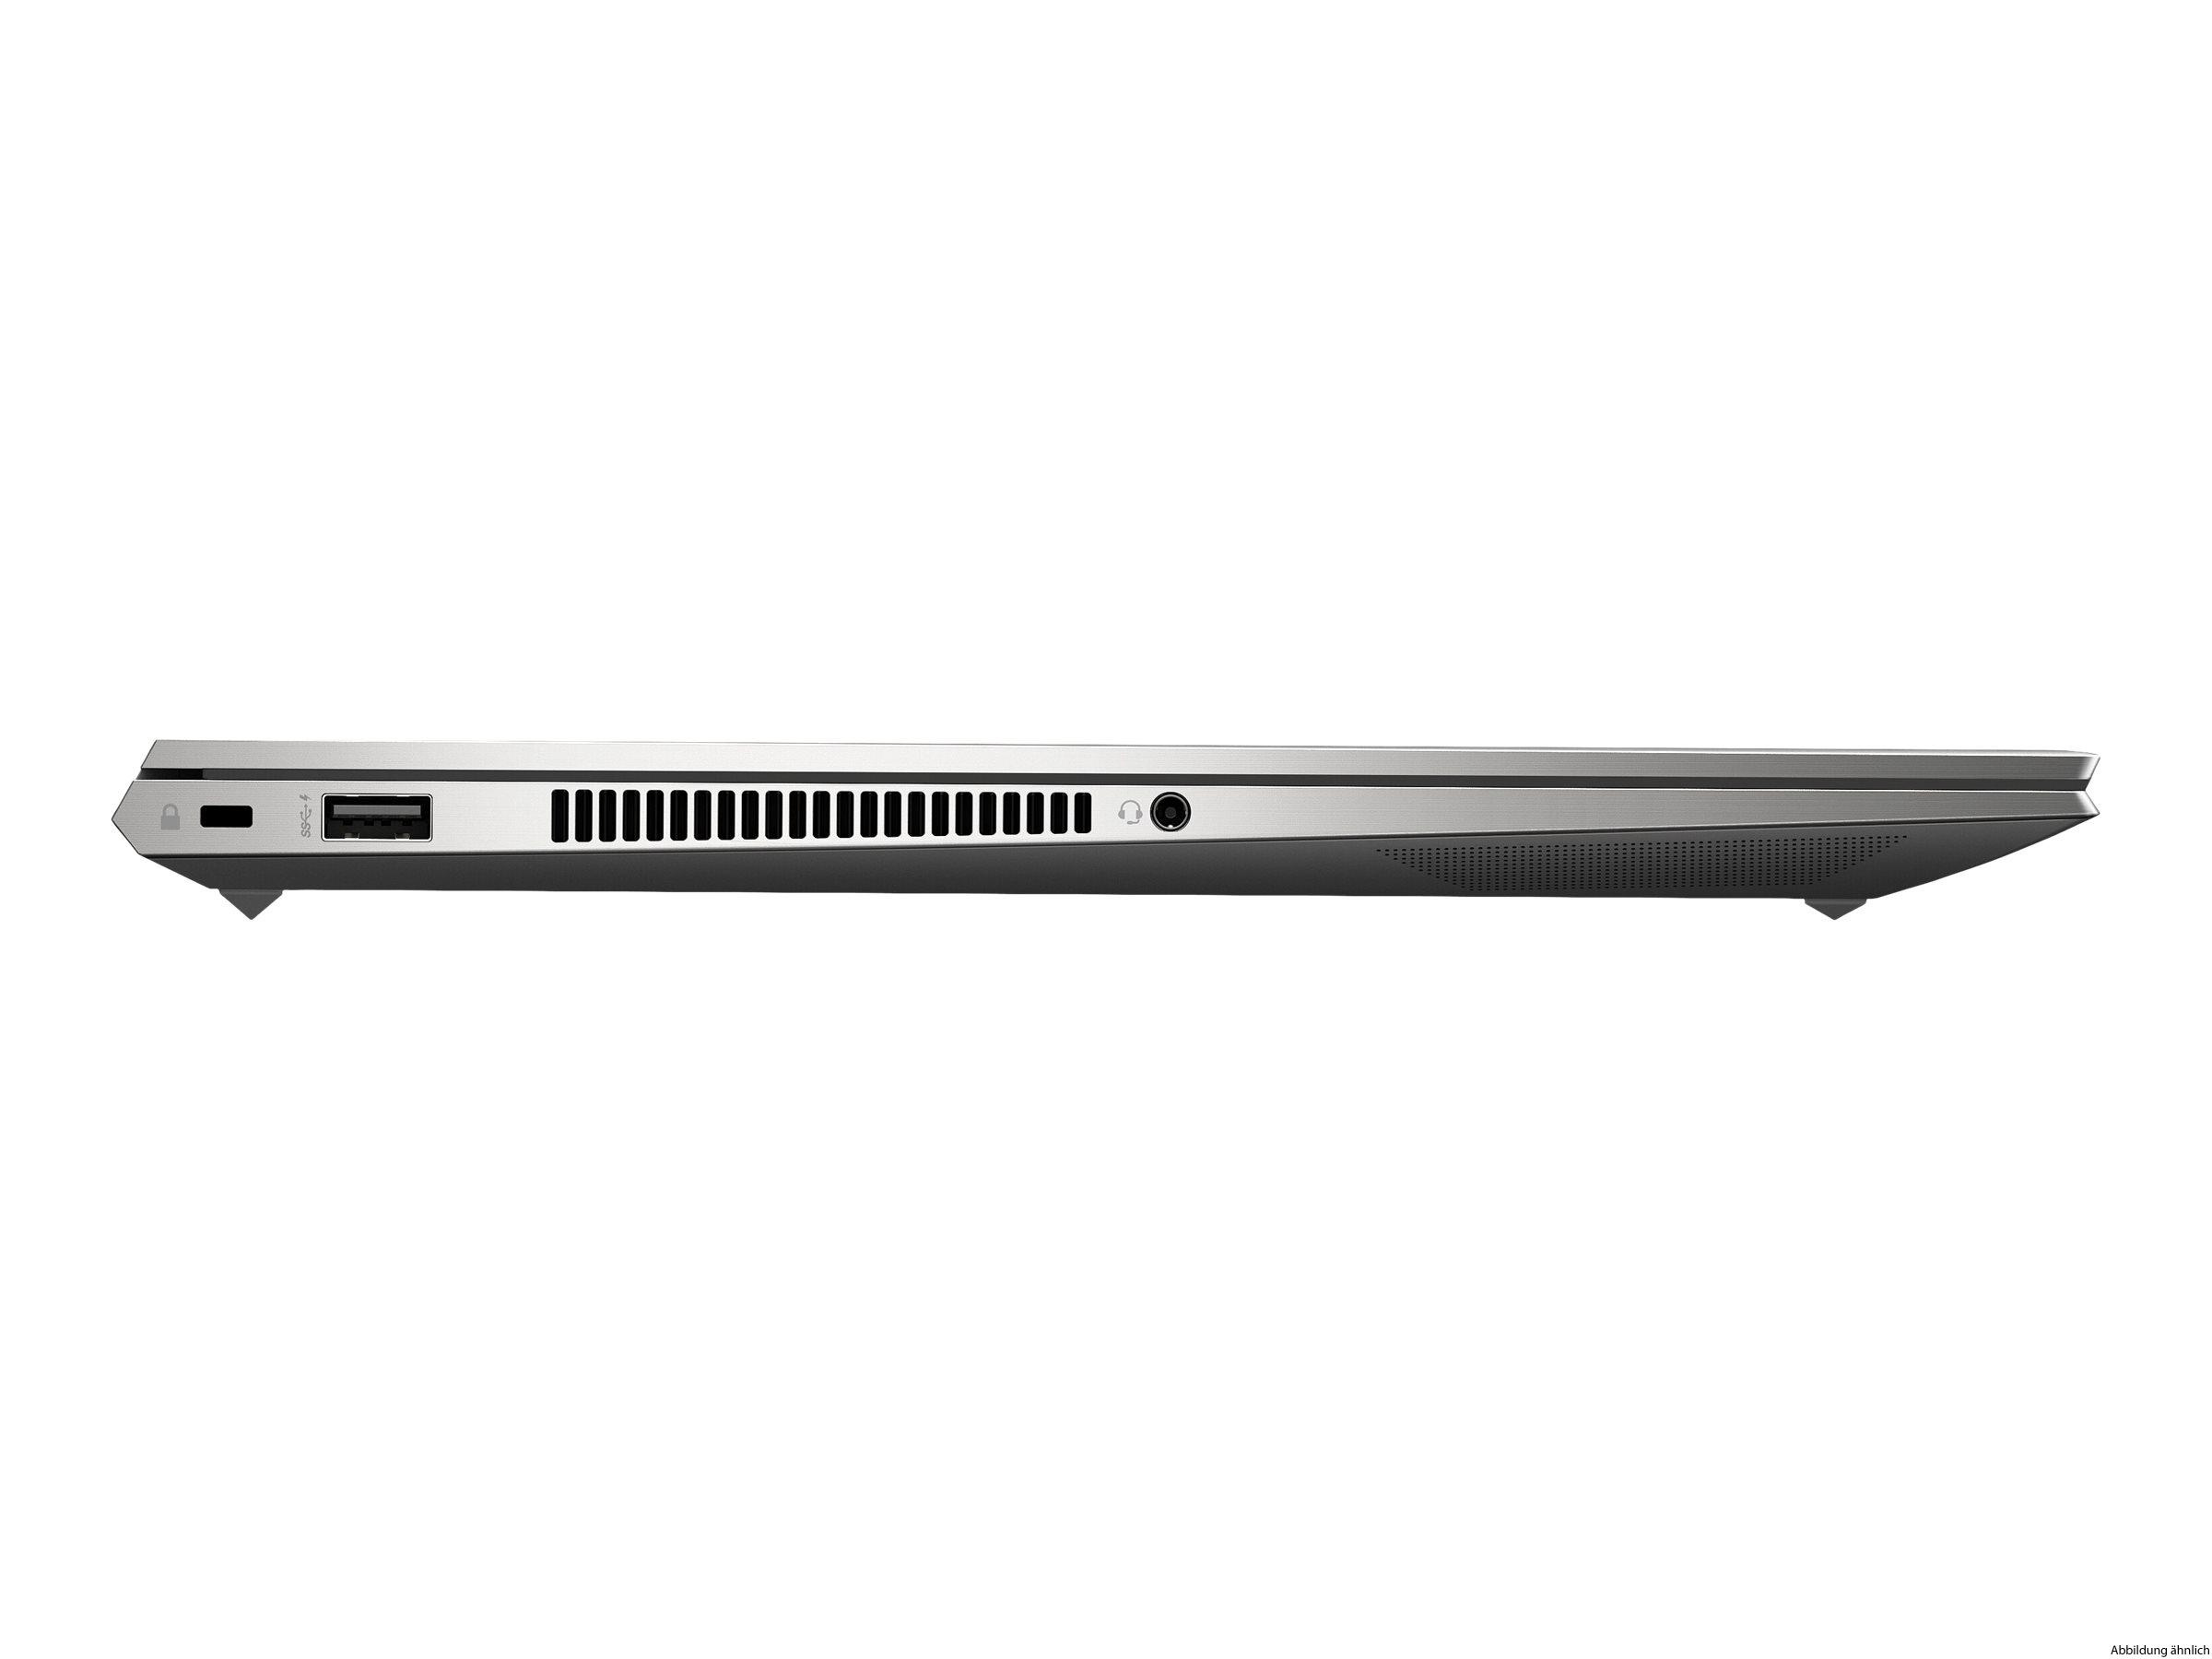 HP ZBook Studio G7 i7-10750H 16GB 512GB M.2 15.6" T2000